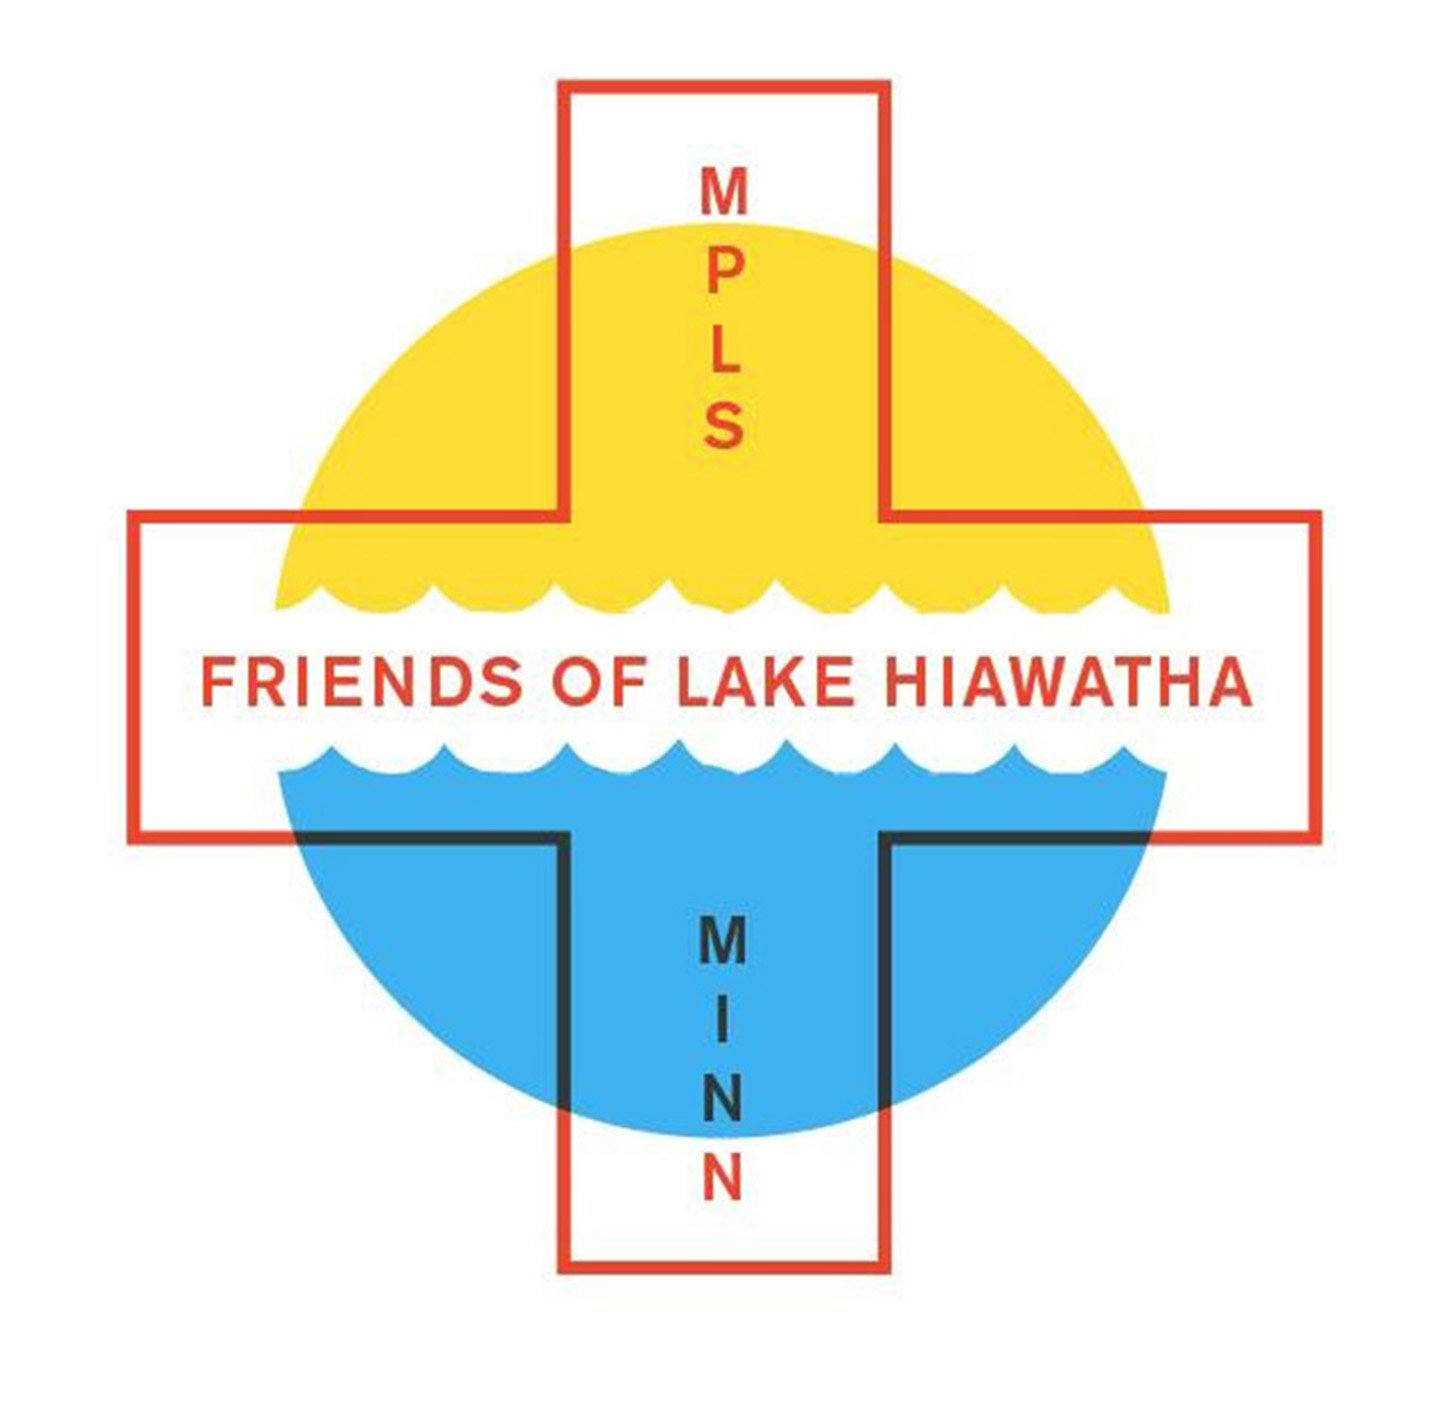 Friends of Lake Hiawatha